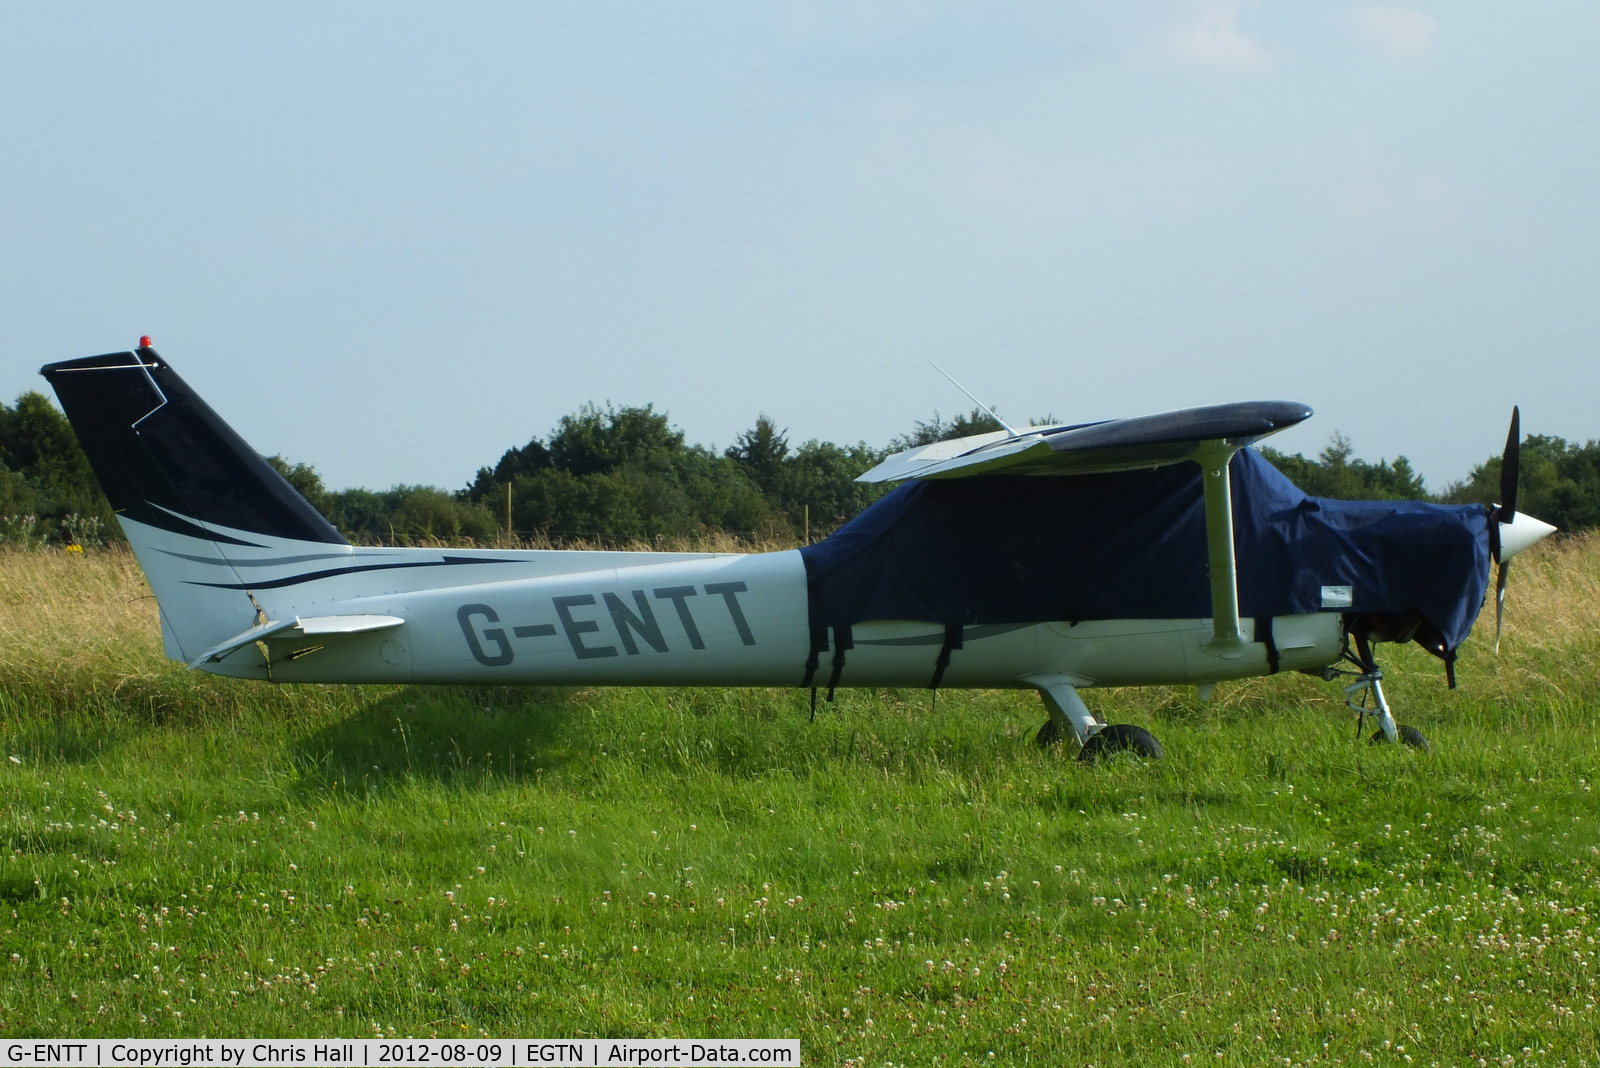 G-ENTT, 1980 Reims F152 C/N 1750, at Enstone Airfield